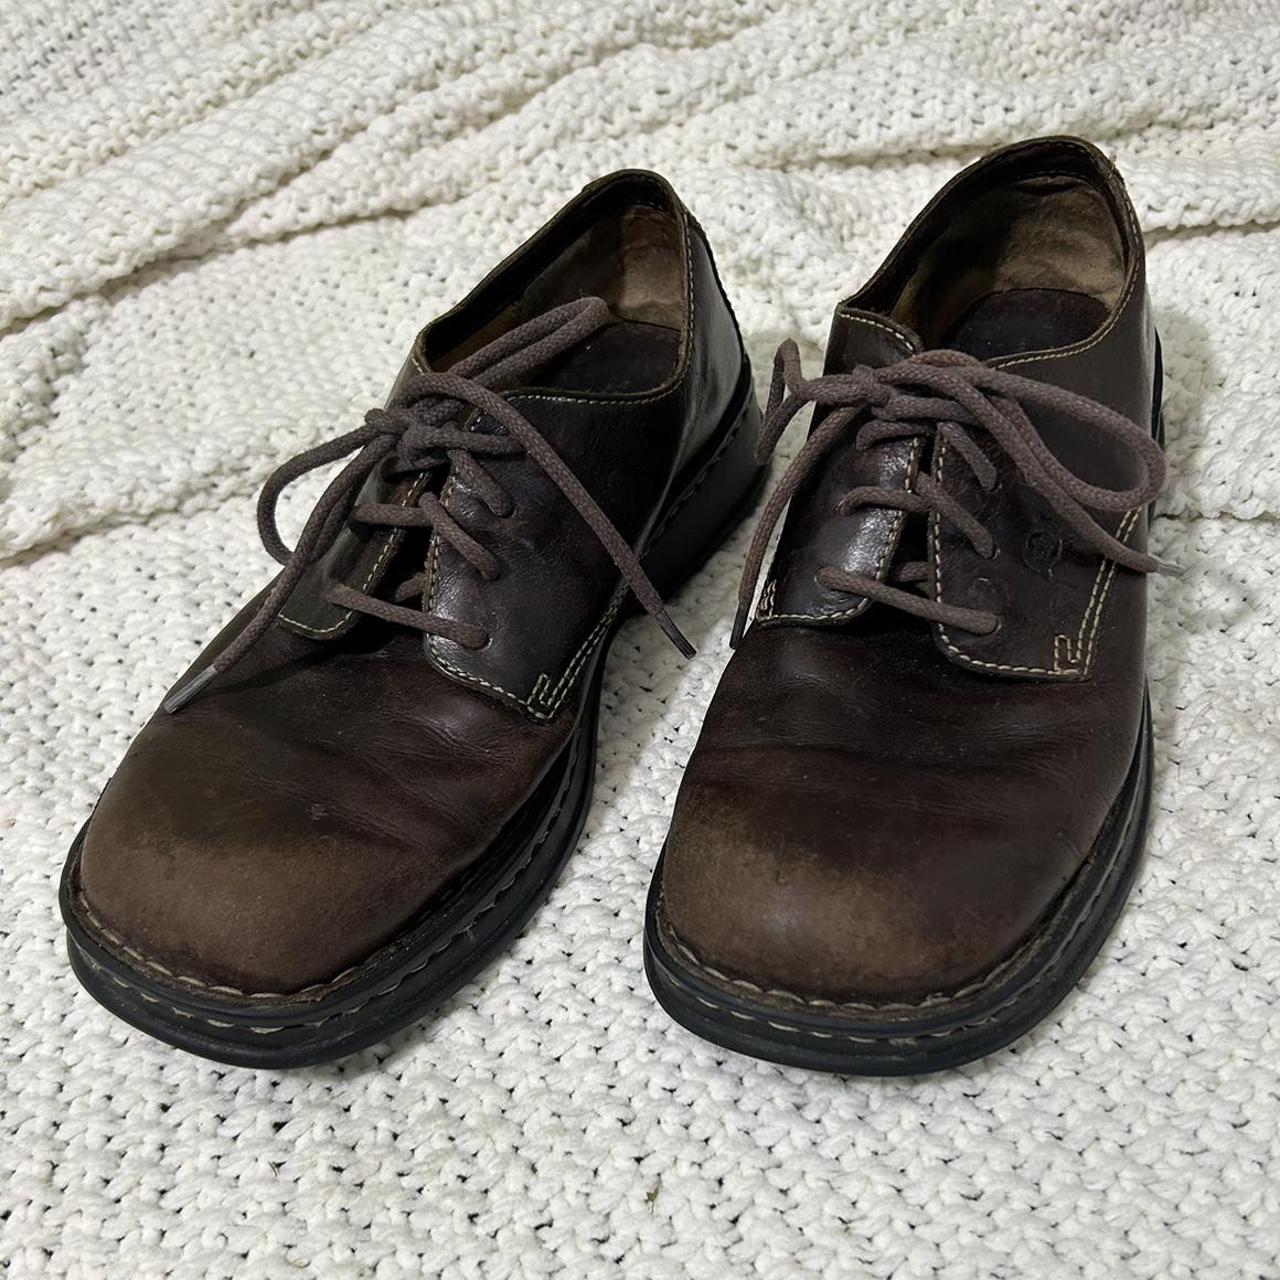 Vintage Born Brand Leather Oxford Boots Size 7.5... - Depop